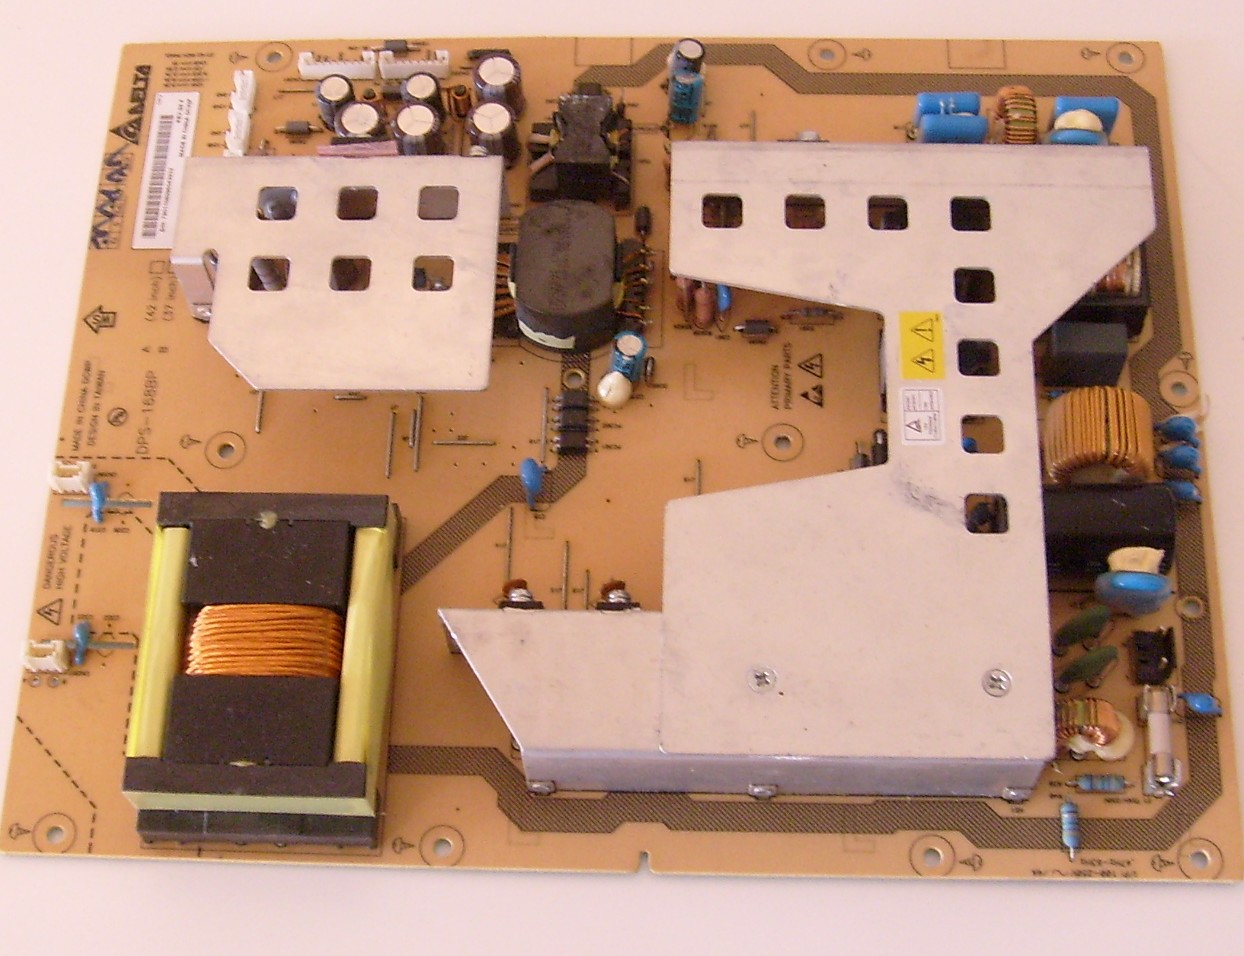 LCD board DPS-168BP 37-42 Delta LCD power supply board